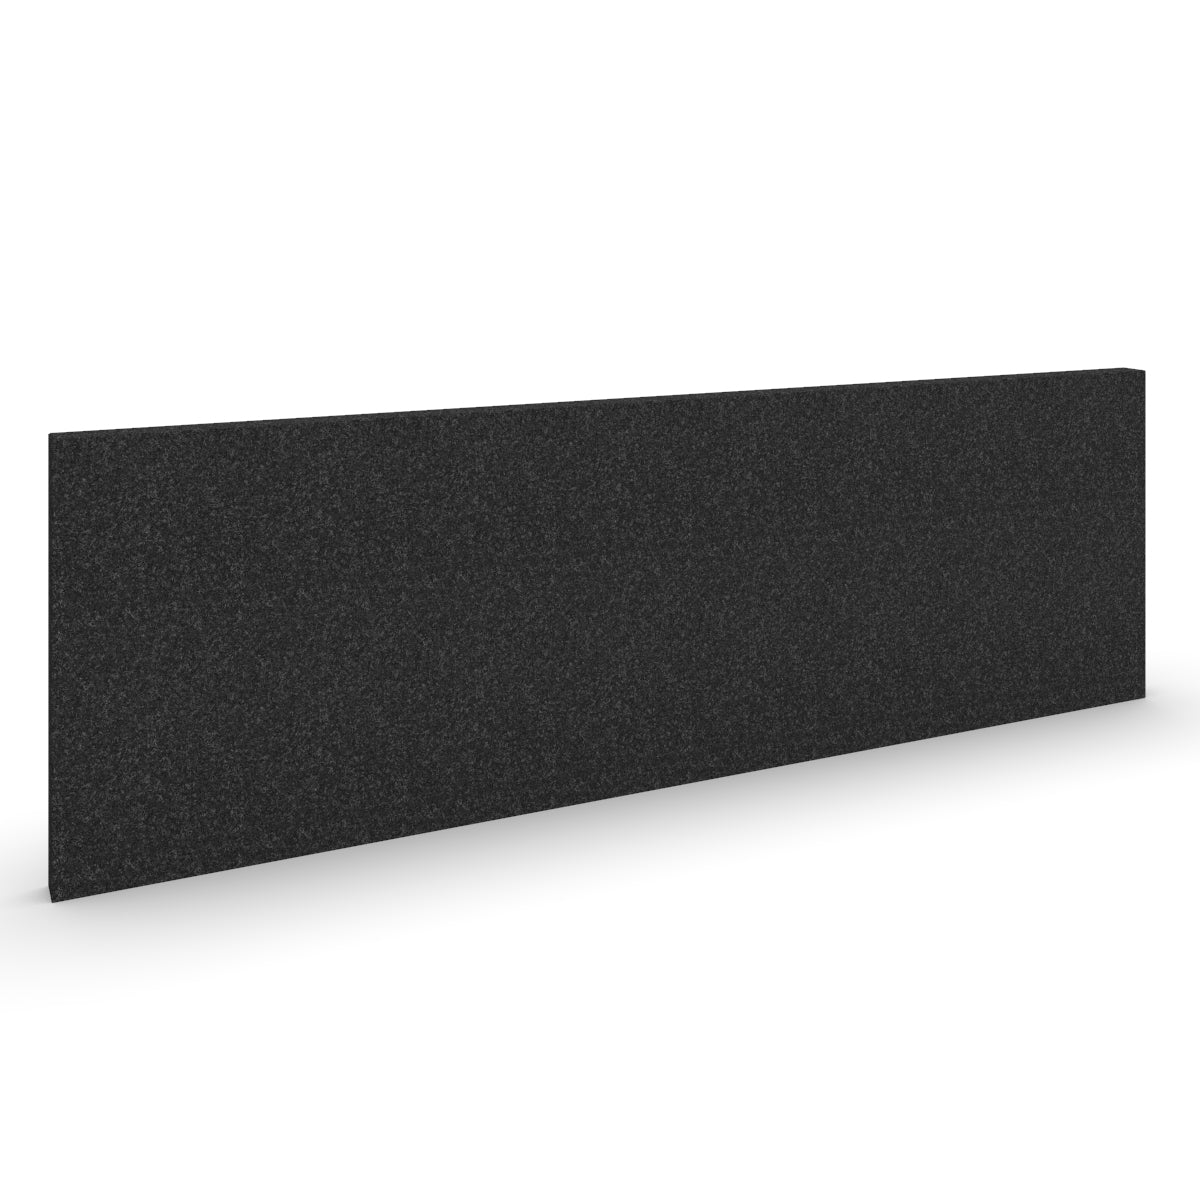 Basic wall sound absorber in black melange acoustic wool felt. Akustikkplater og lyddemping vegg